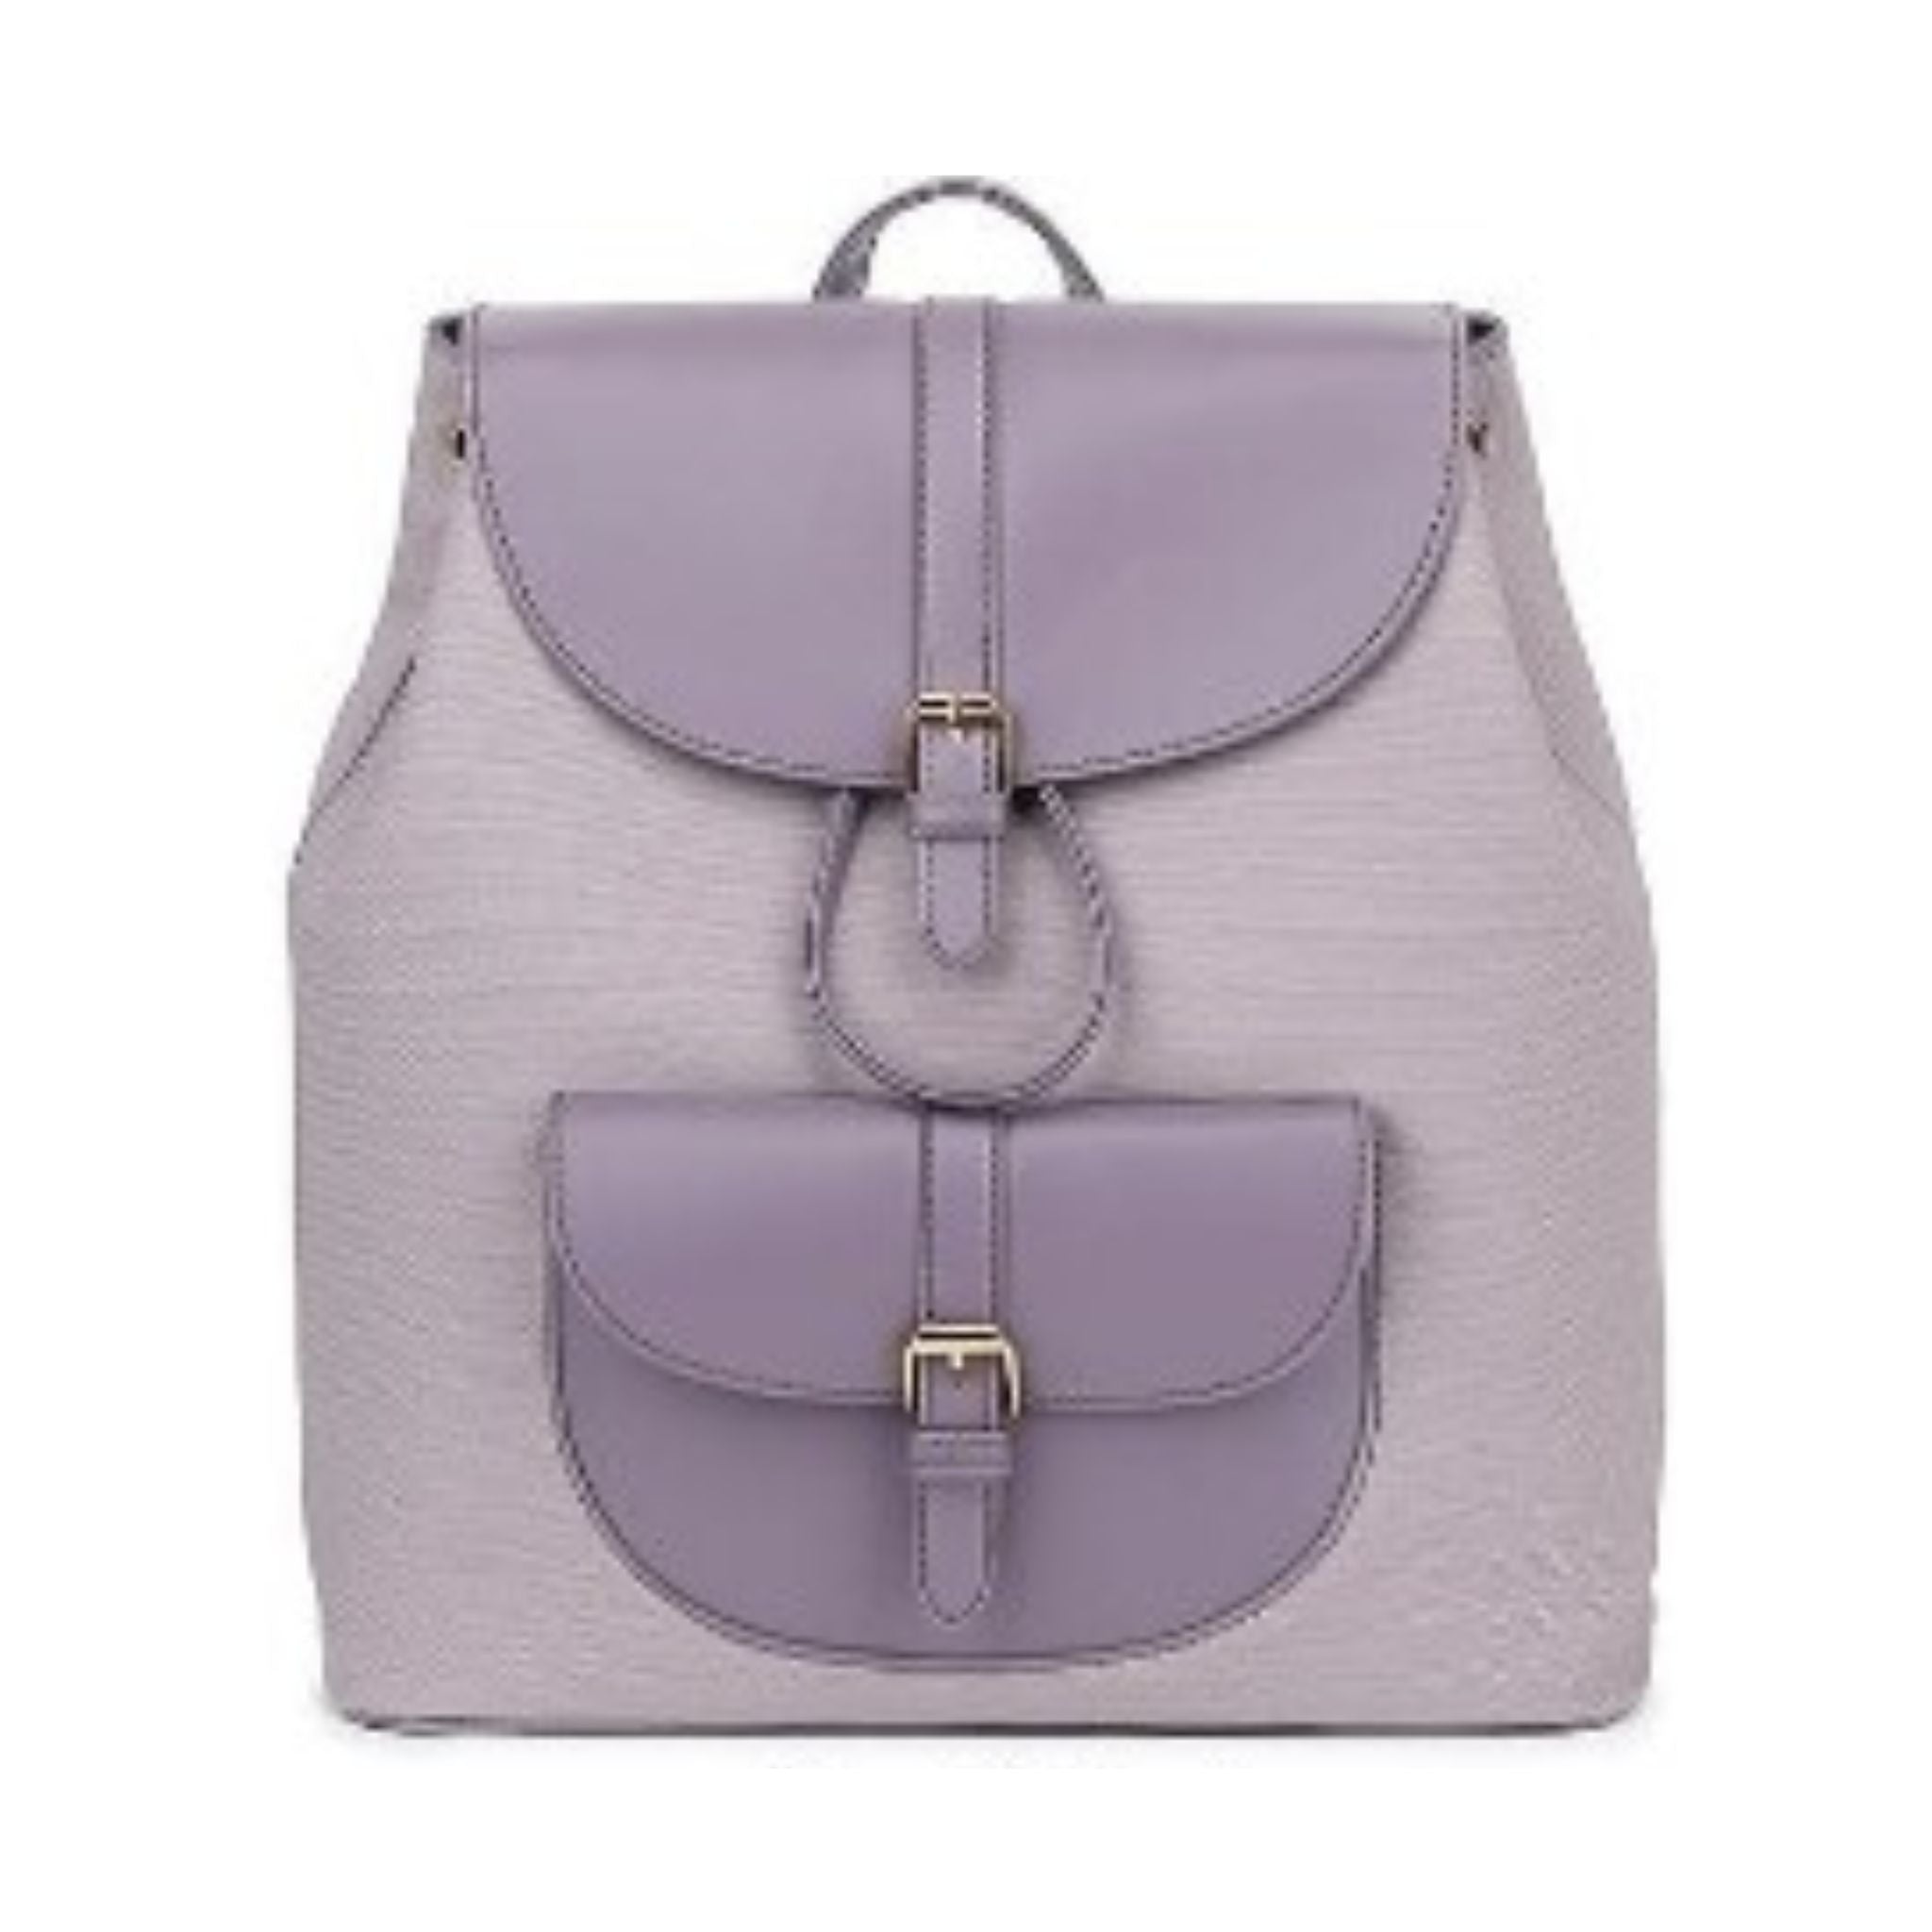 KS2300 Bosalina Fashion Backpack